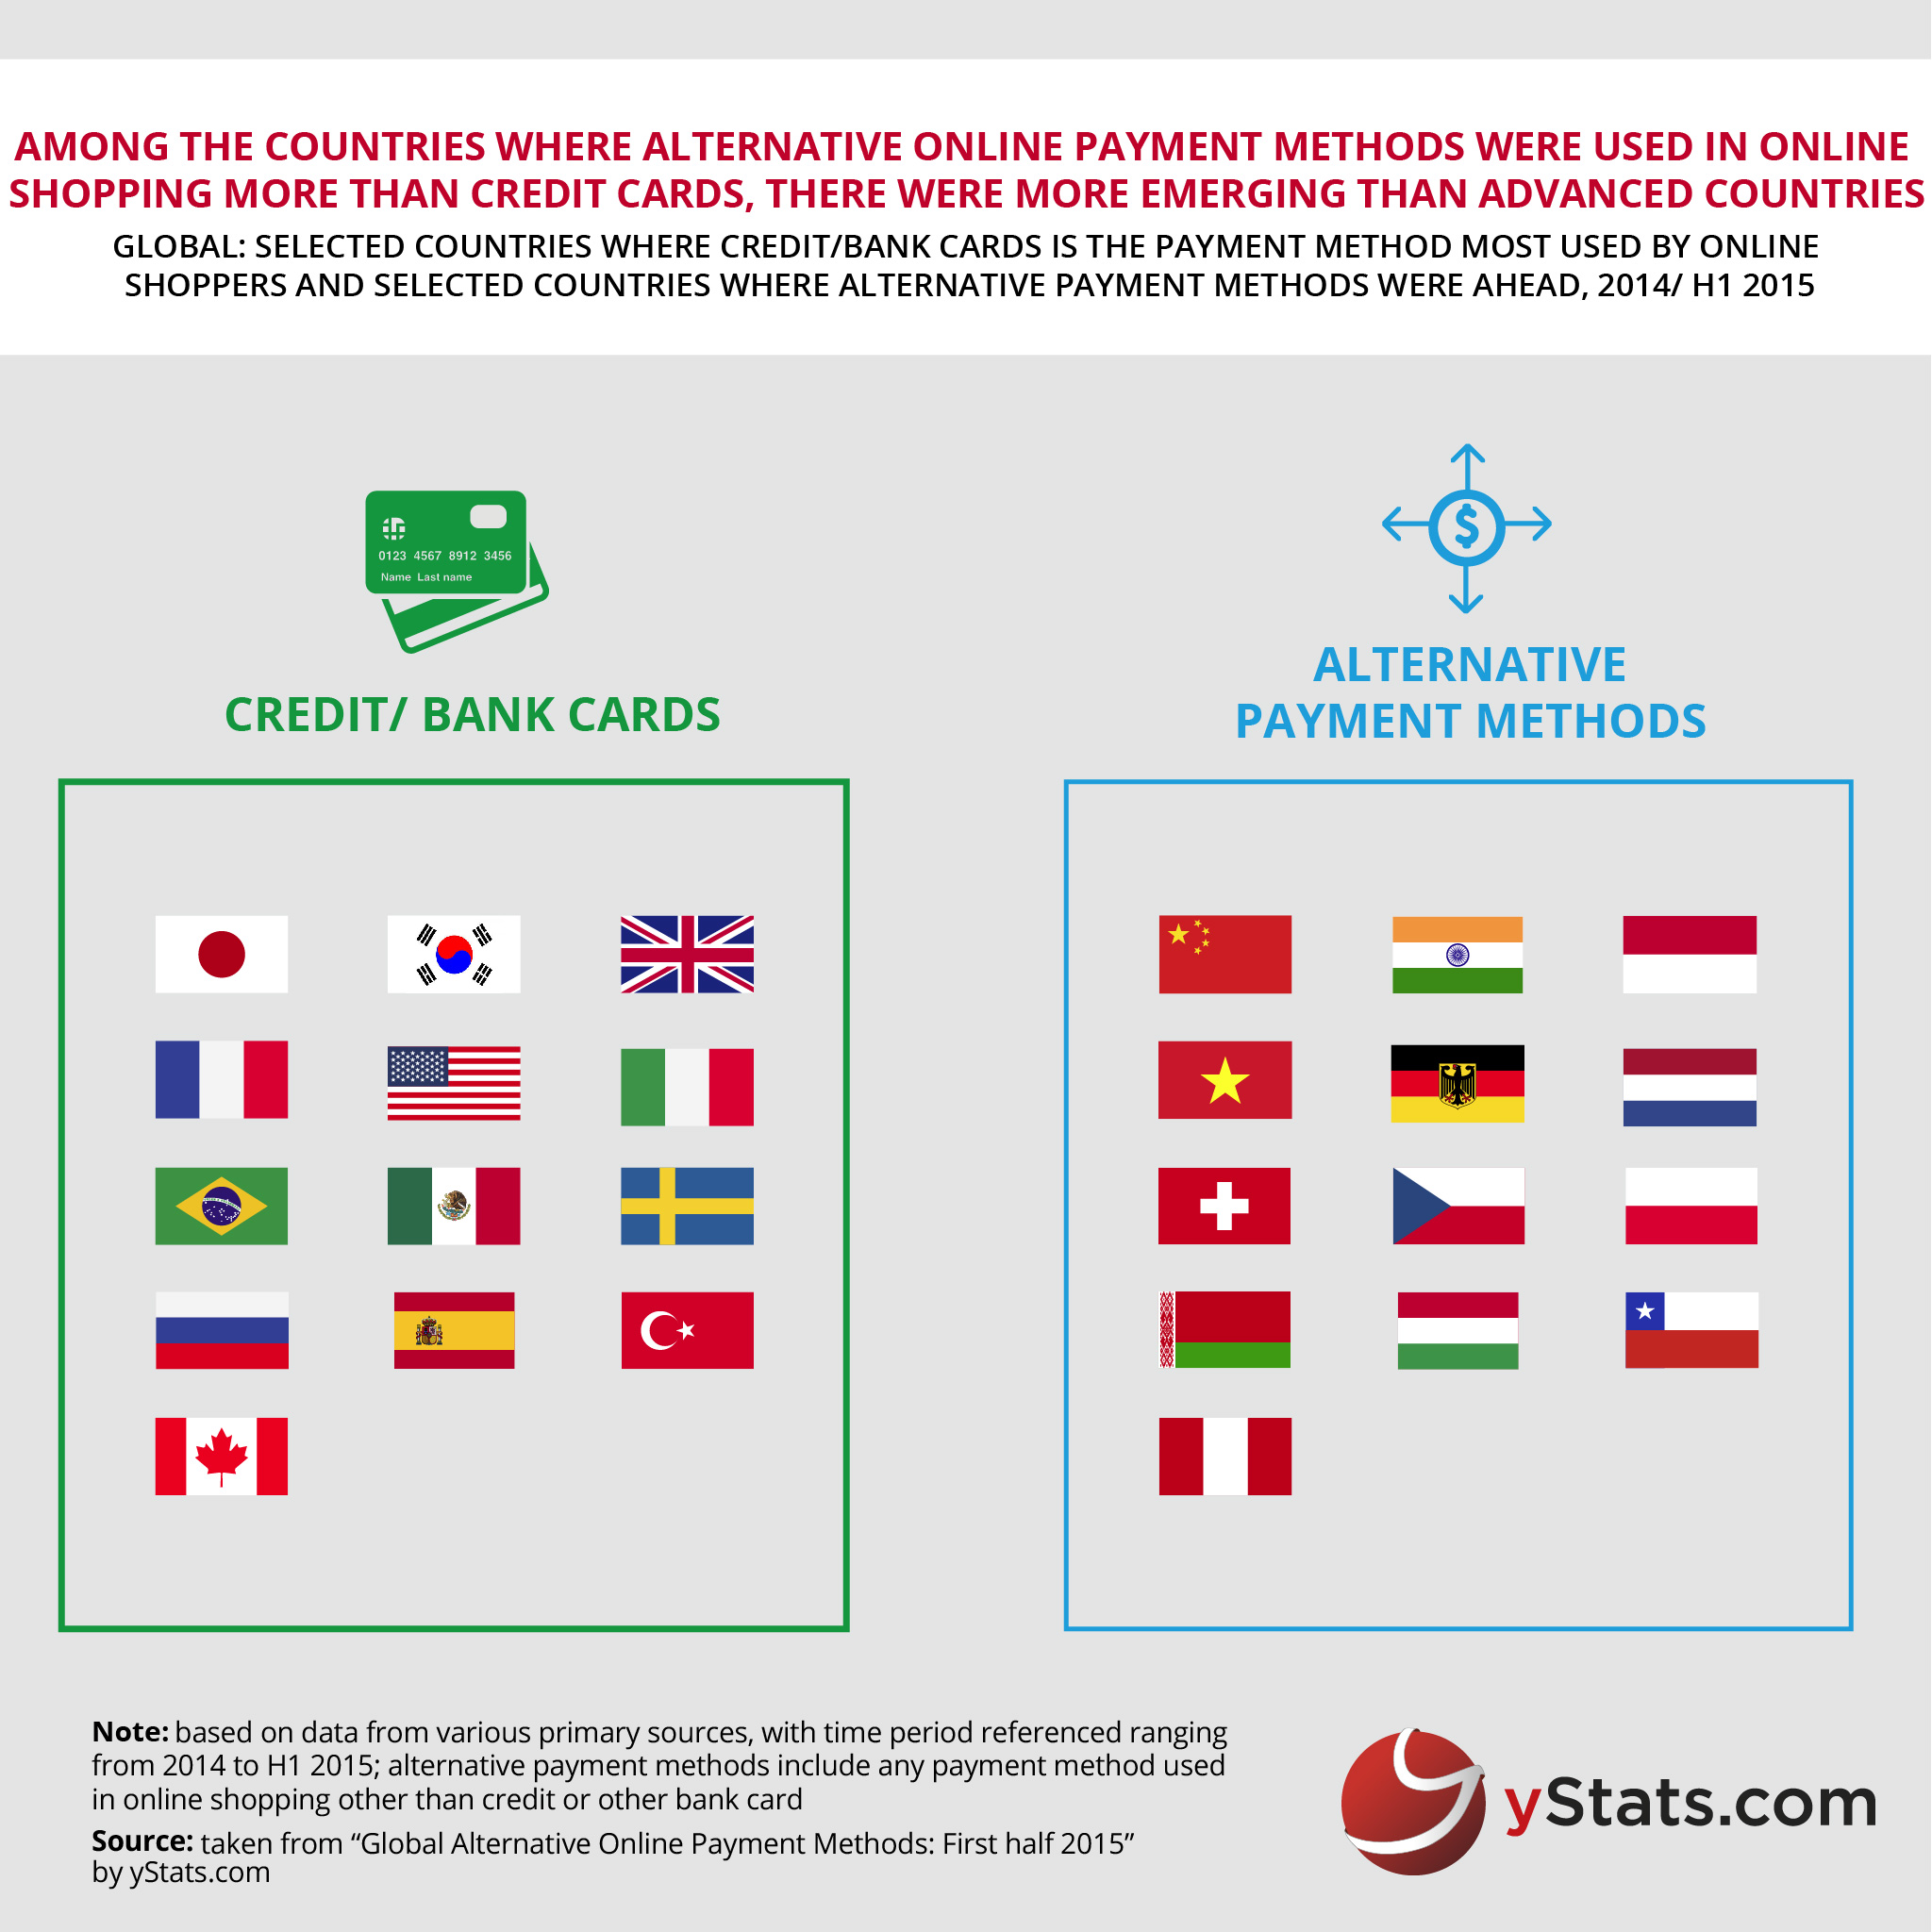 yStats.com Infographic Global Alternative Online Payment Methods First Half 2015